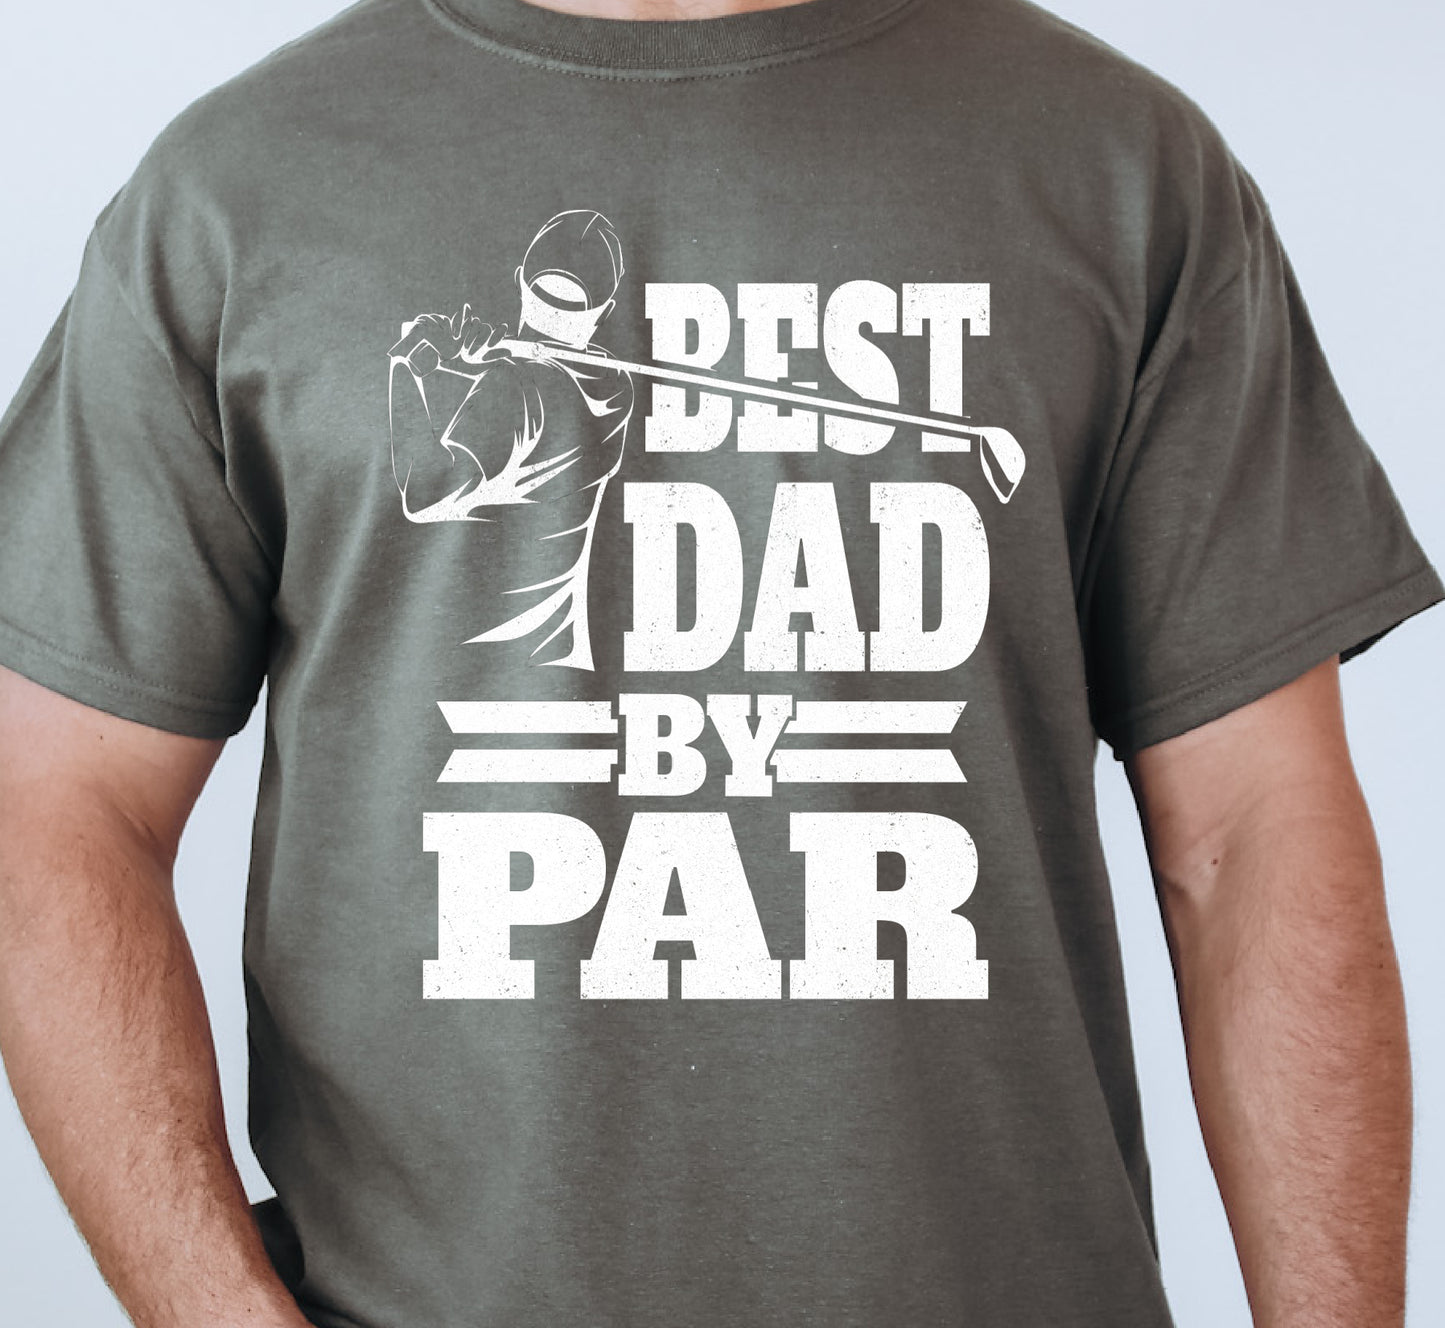 Best Dad By Par DTF Transfers DTF2063